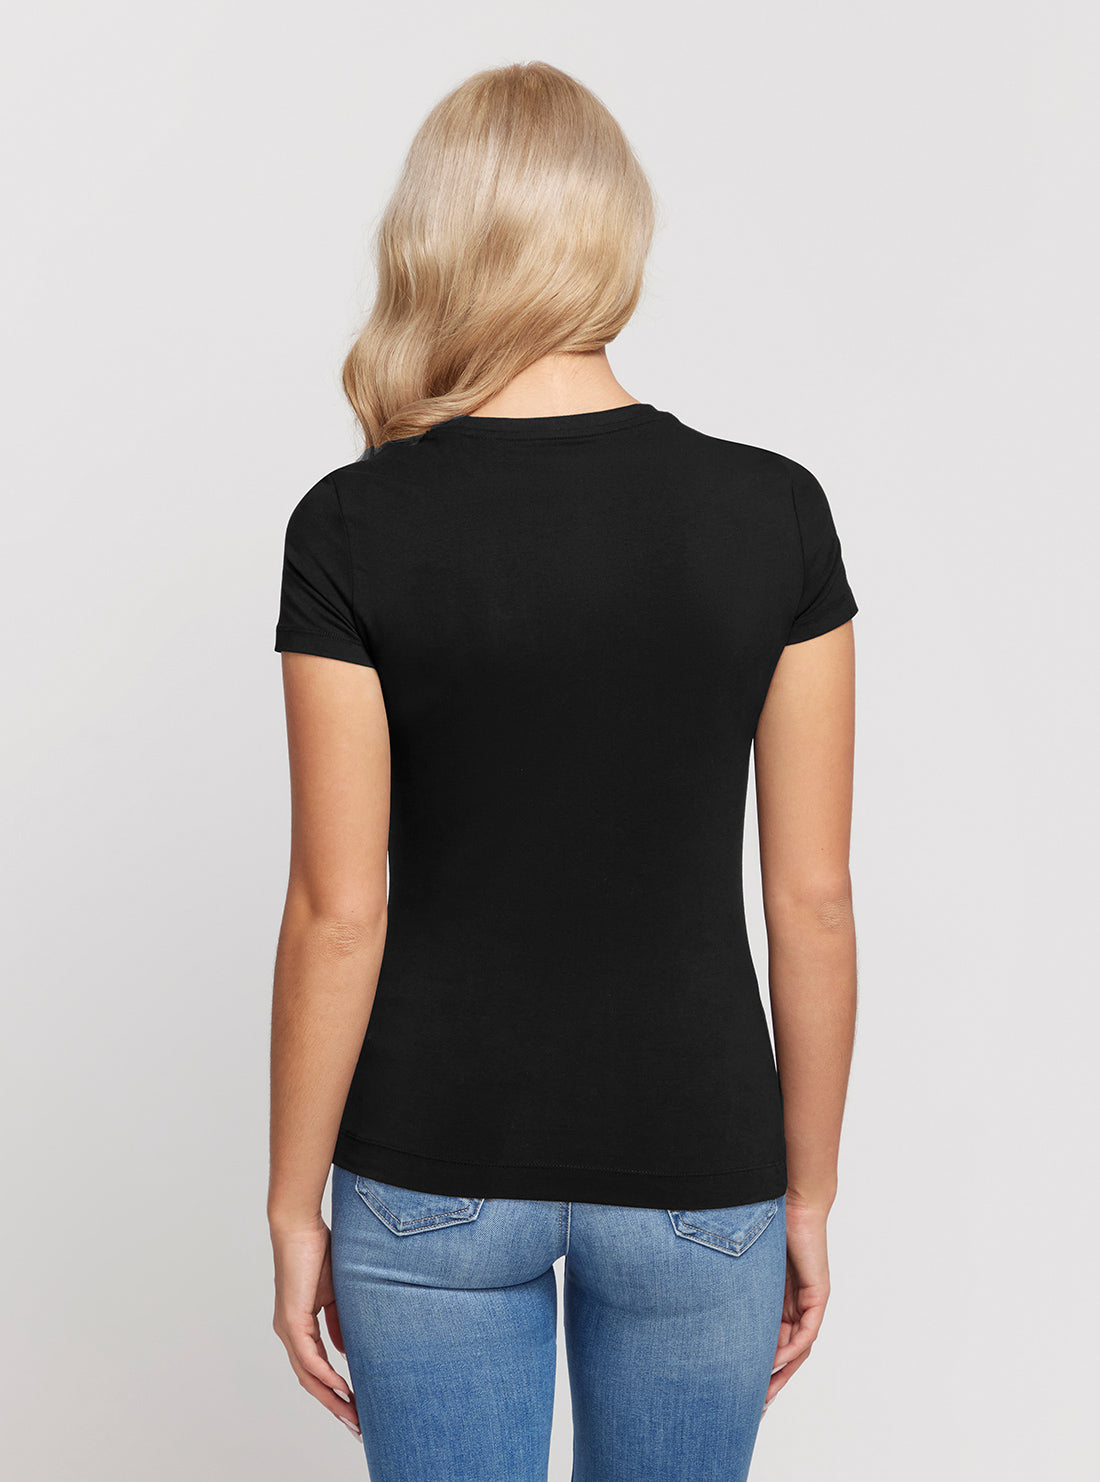 GUESS Black Short Sleeve Stones Logo T-Shirt back view